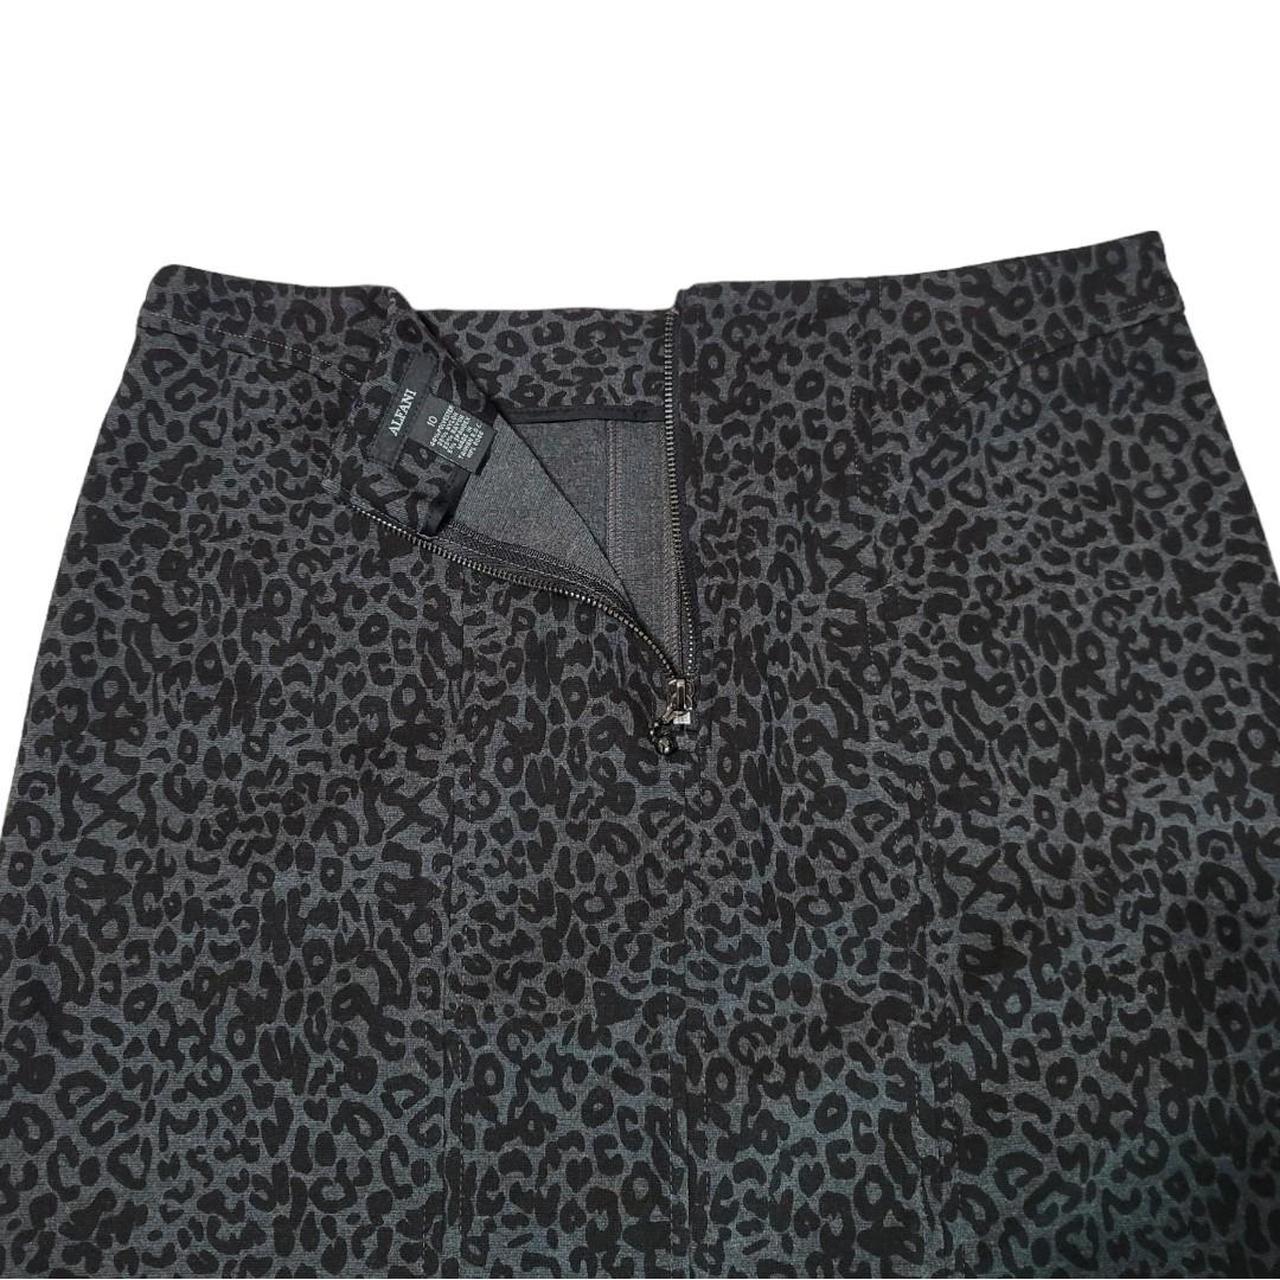 Alfani Petite Leopard Print Skirt 10P